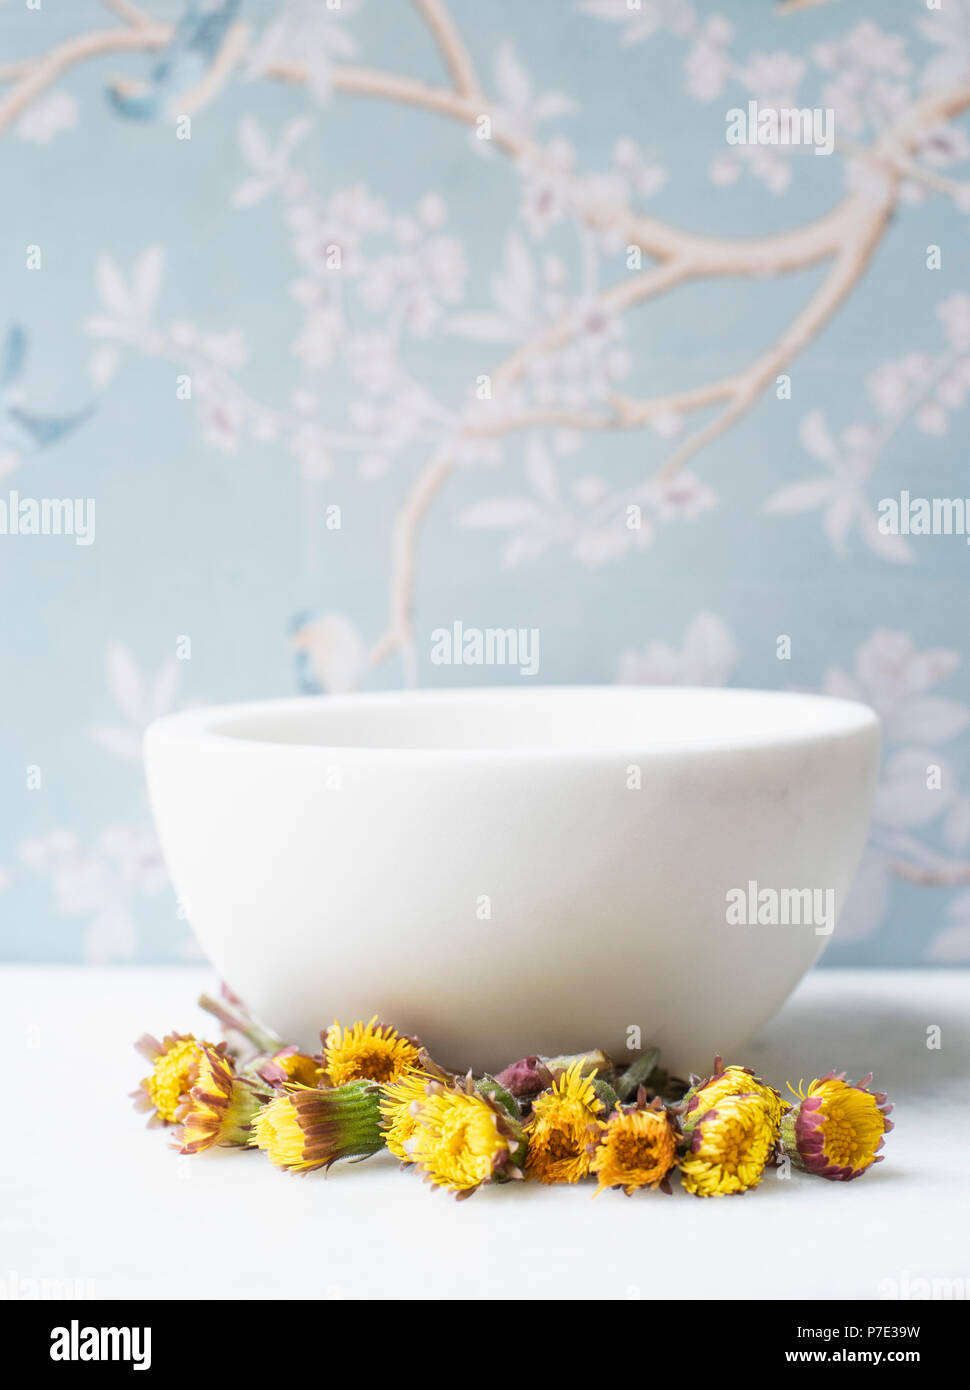 Dandelions by ceramic bowl Stock Photo